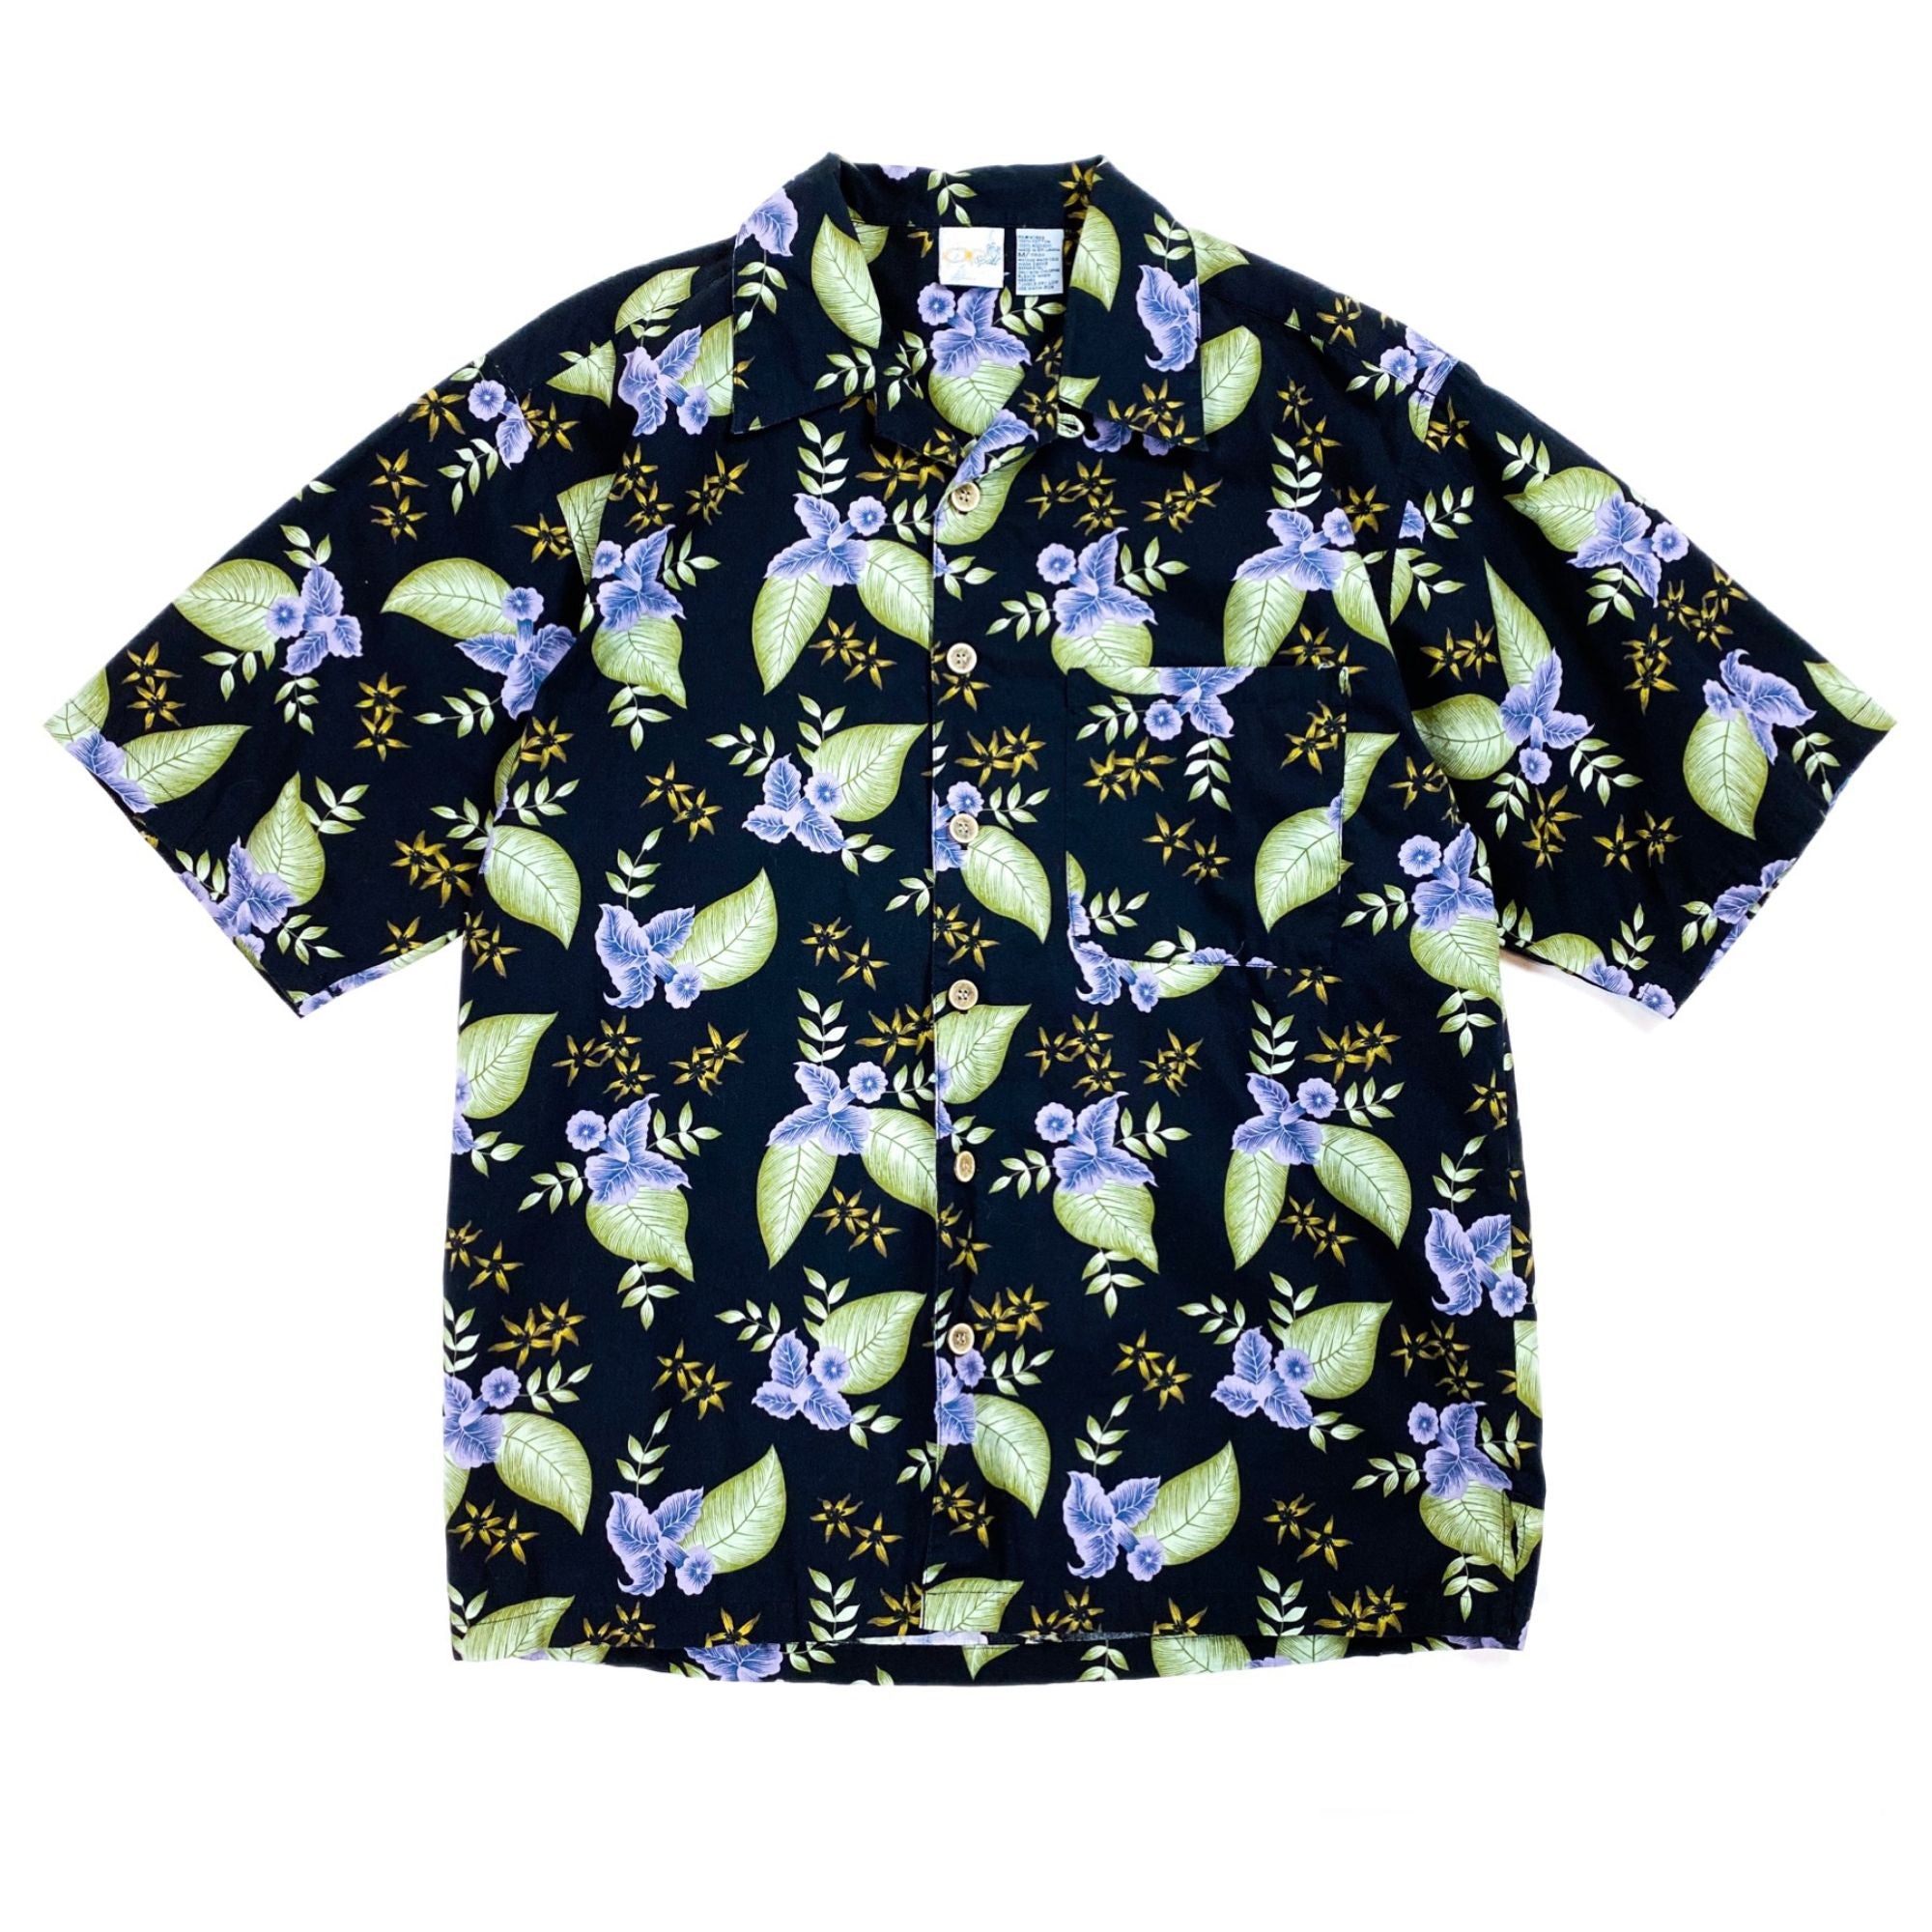 90's Ocean Pacific ブラックアロハシャツ